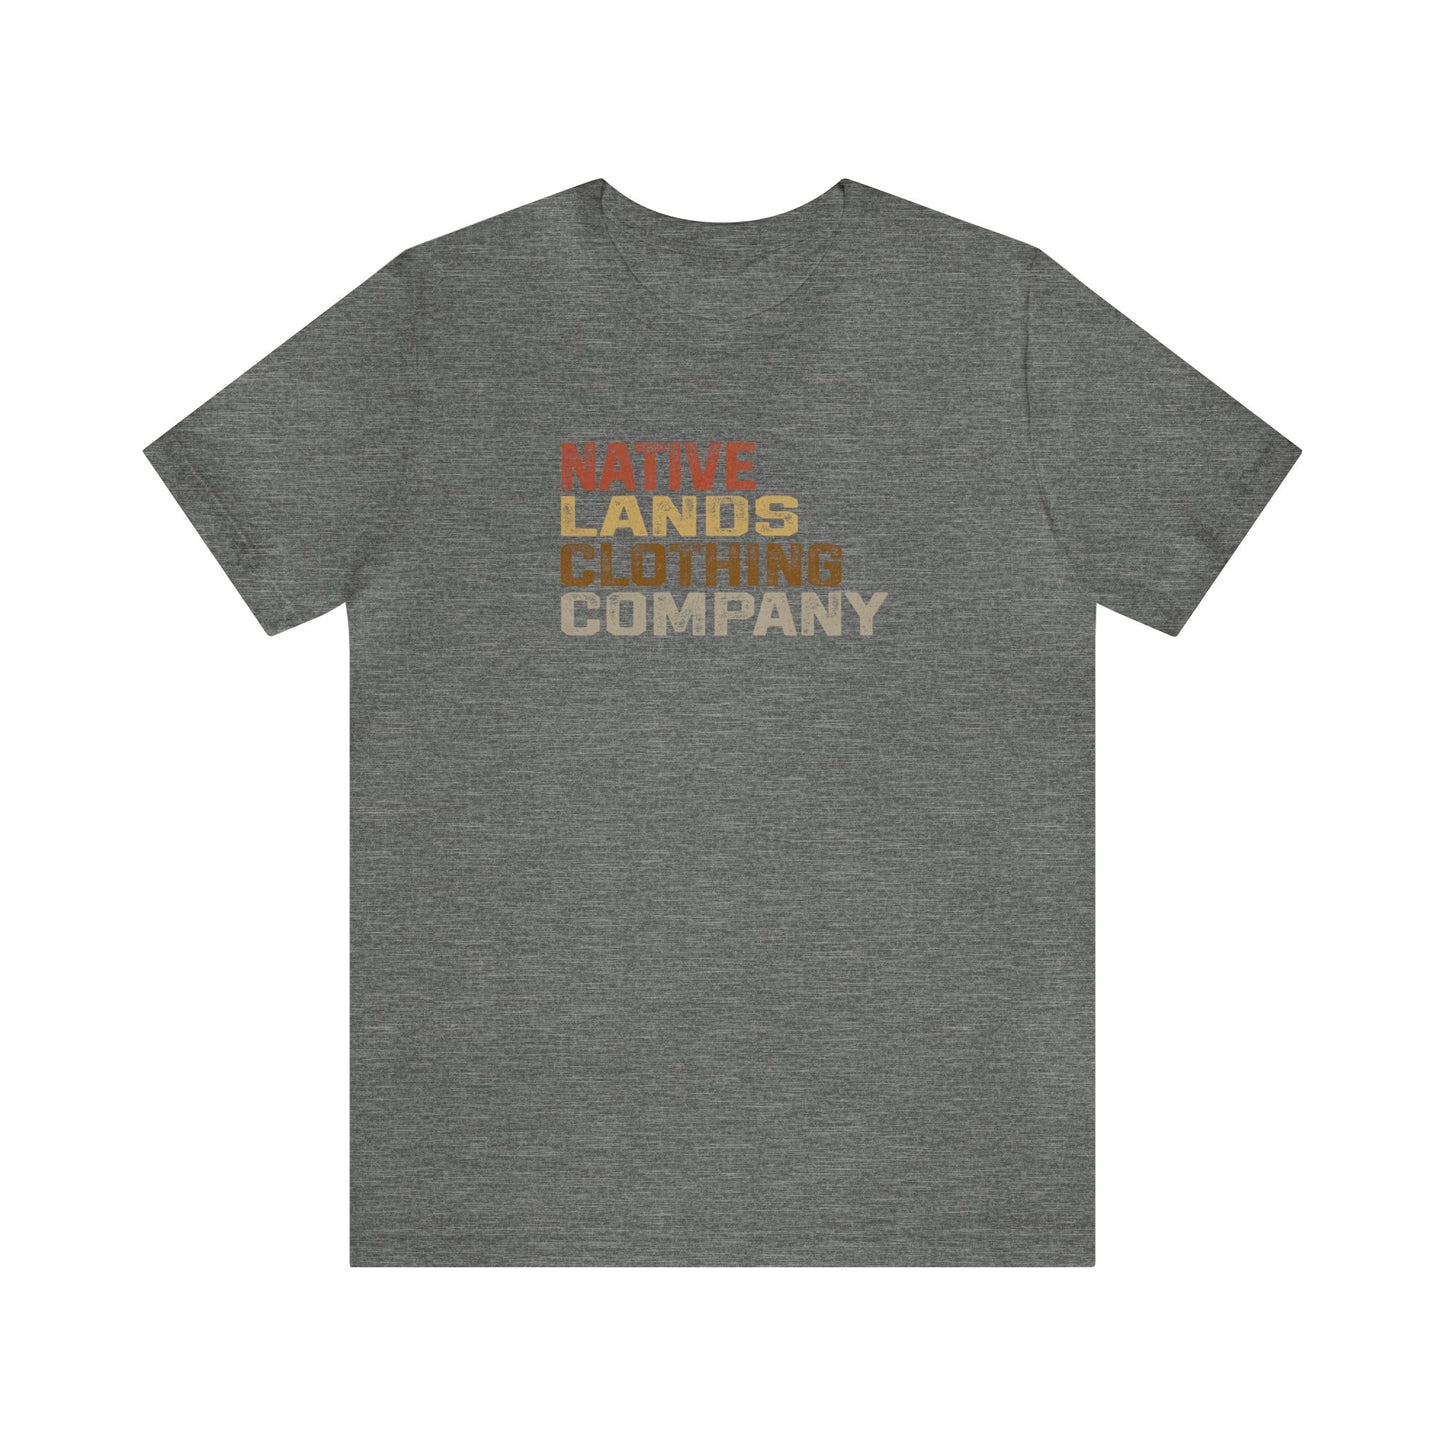 Native Lands Clothing Company Earth Shirt Kotoia Native American